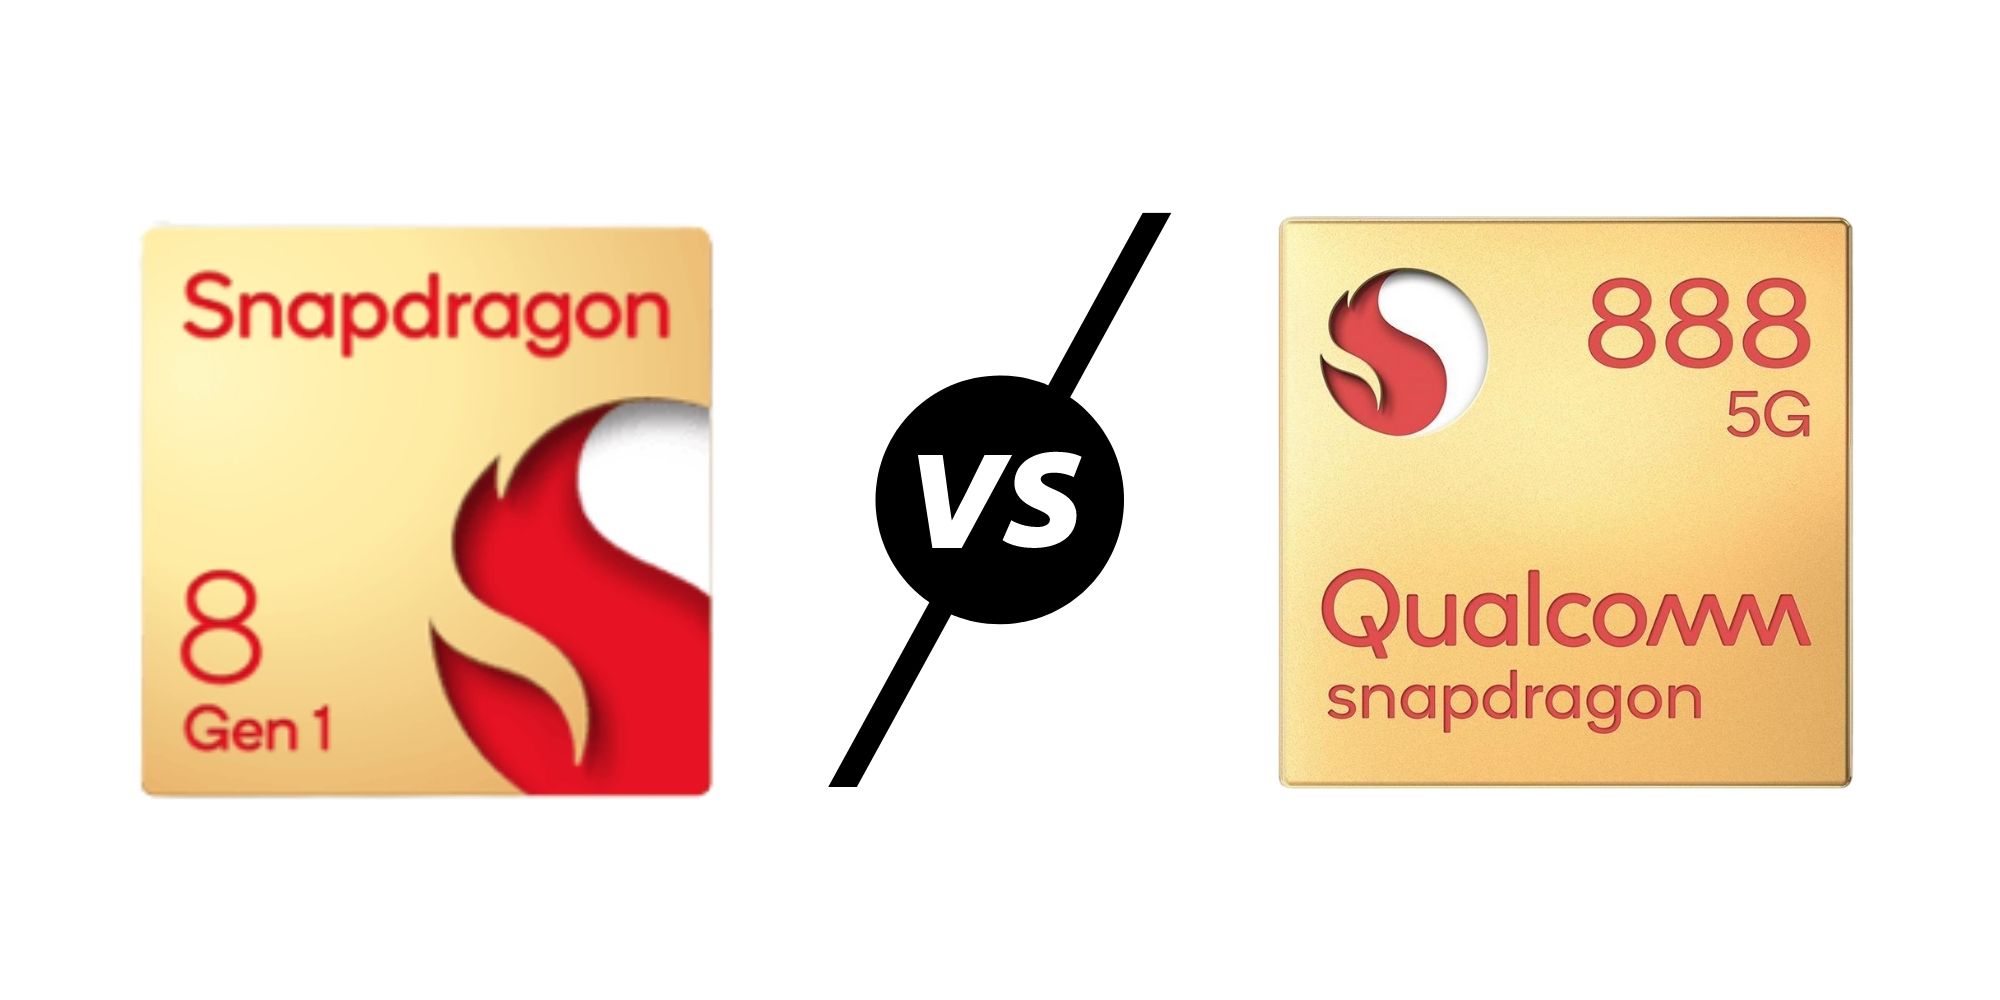 Qualcomm Snapdragon 8 Gen 1 vs Snapdragon 888 Specifications Compared – Big camera improvements but no AV1 decoding